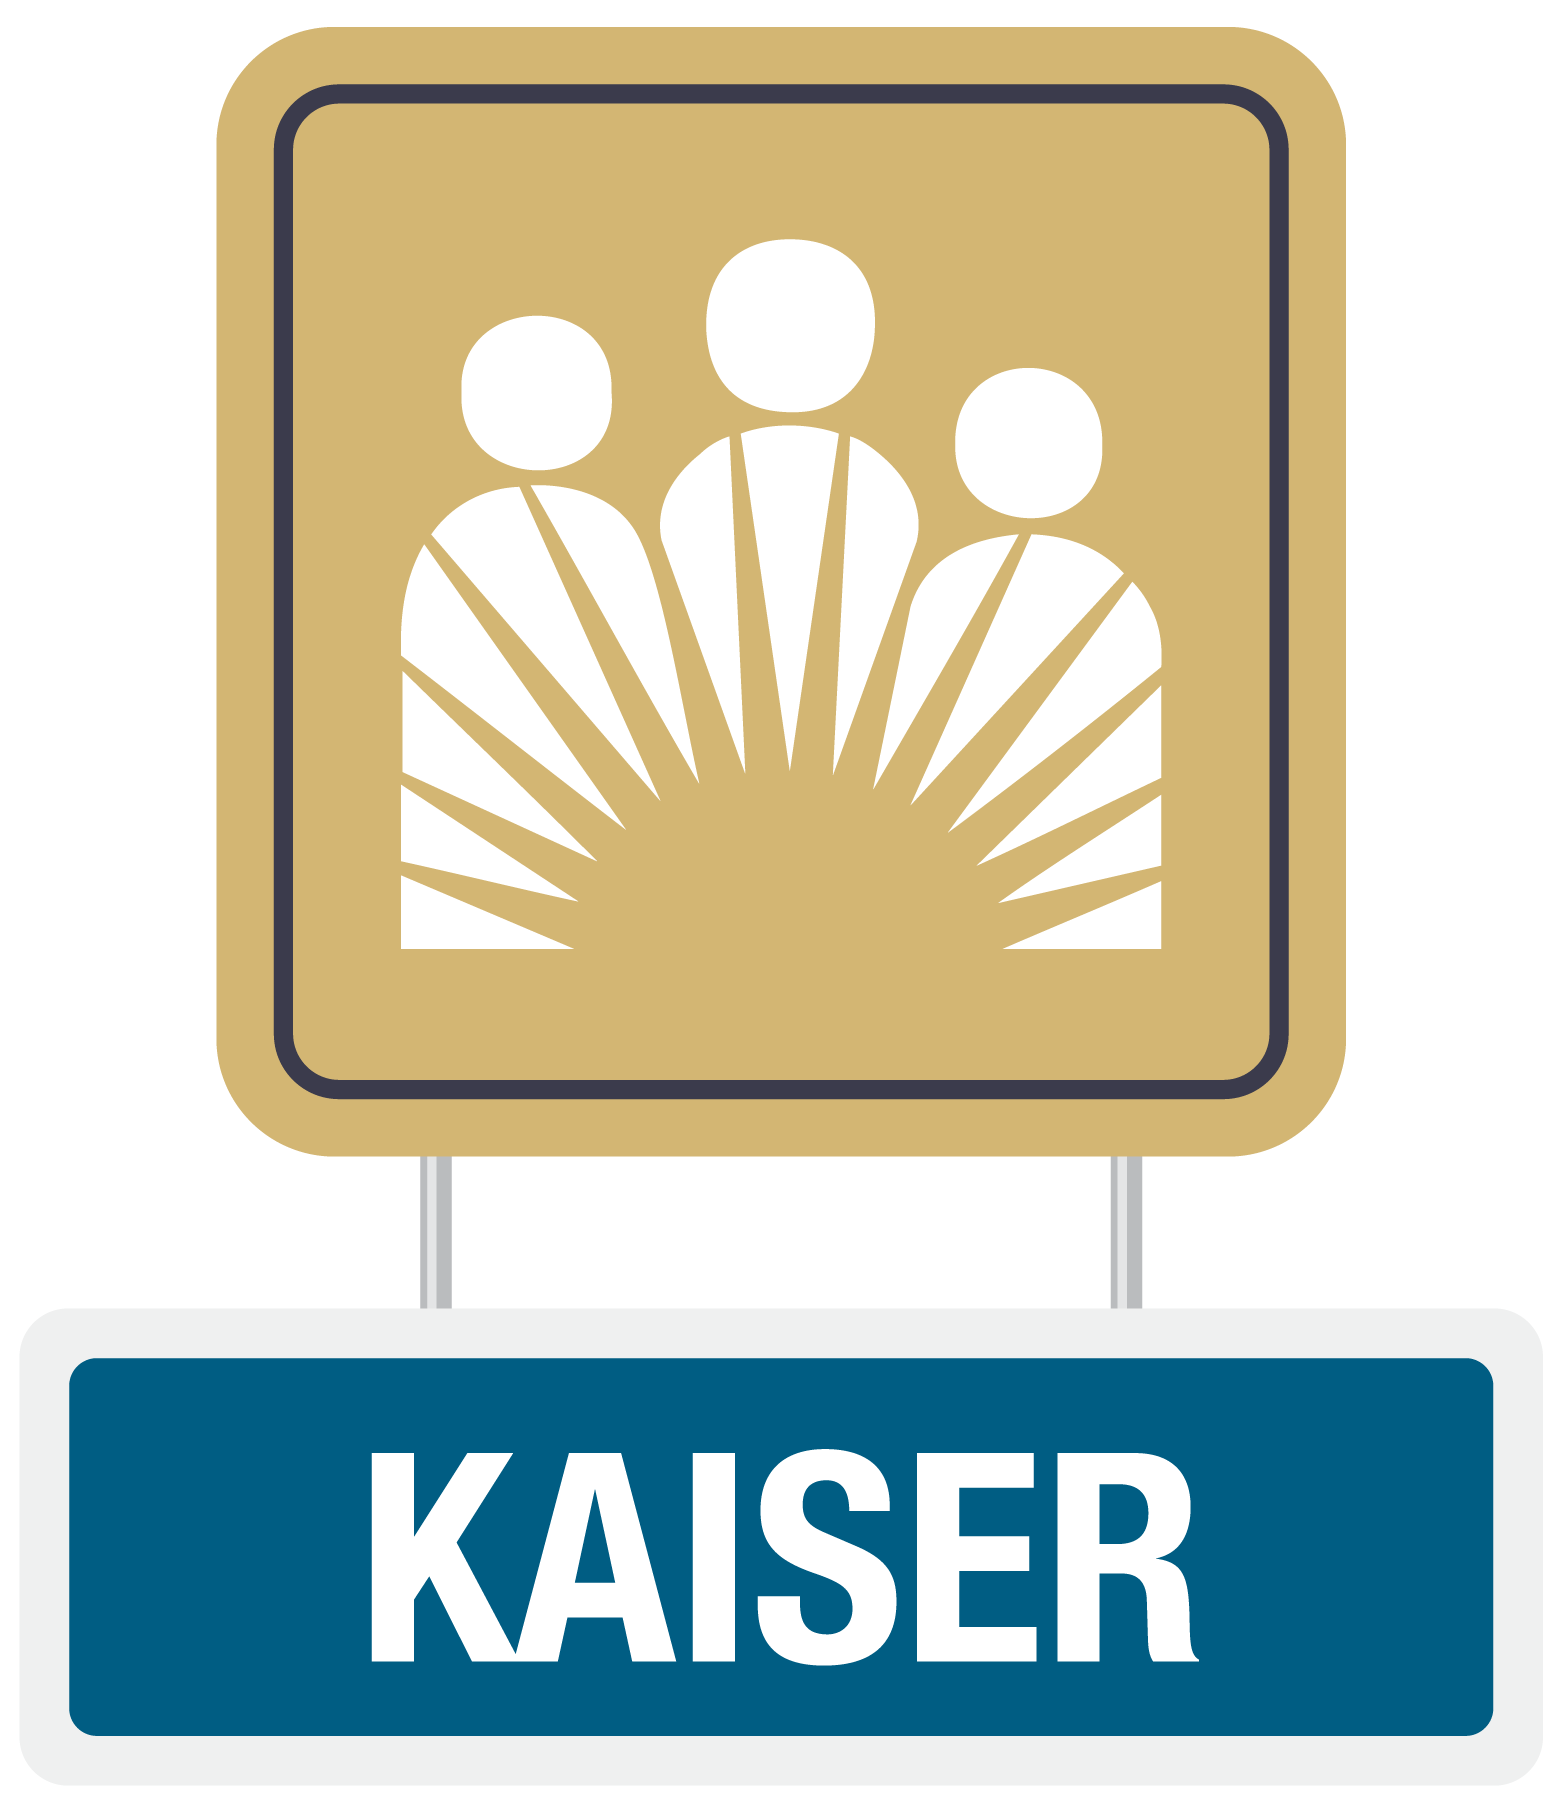 Kaiser fair page - click to access